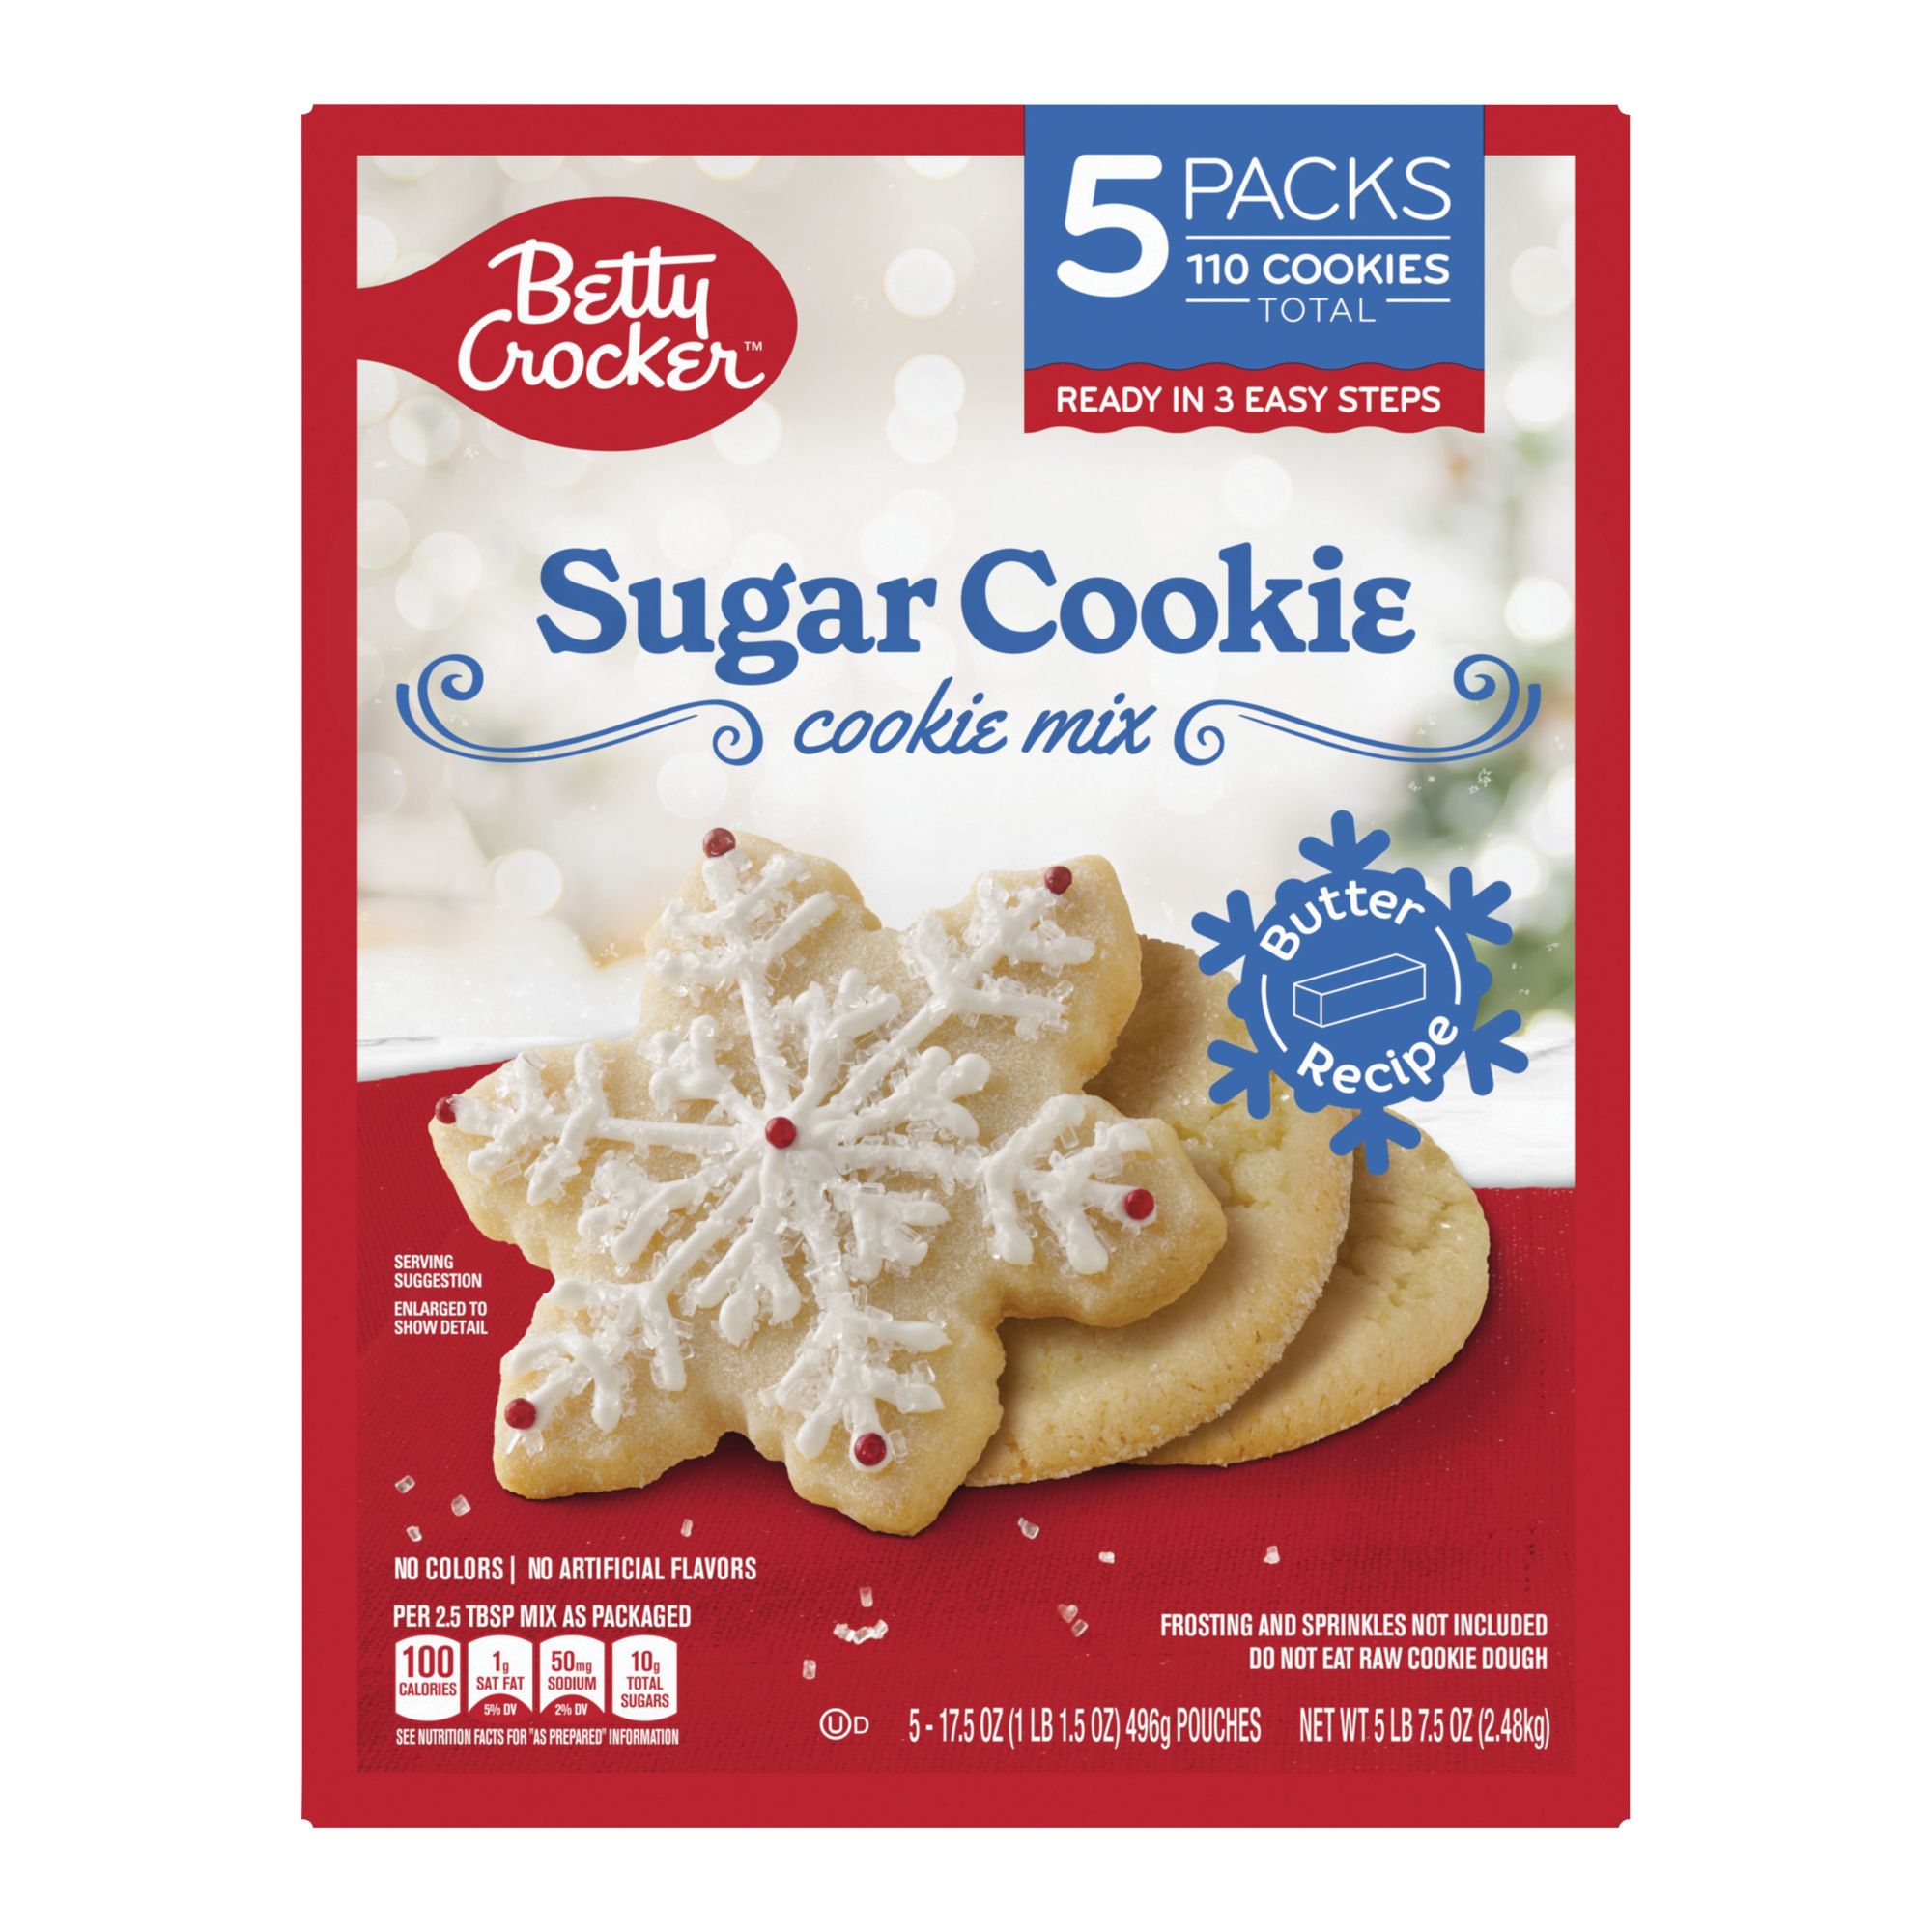 betty crocker sugar cookie mix